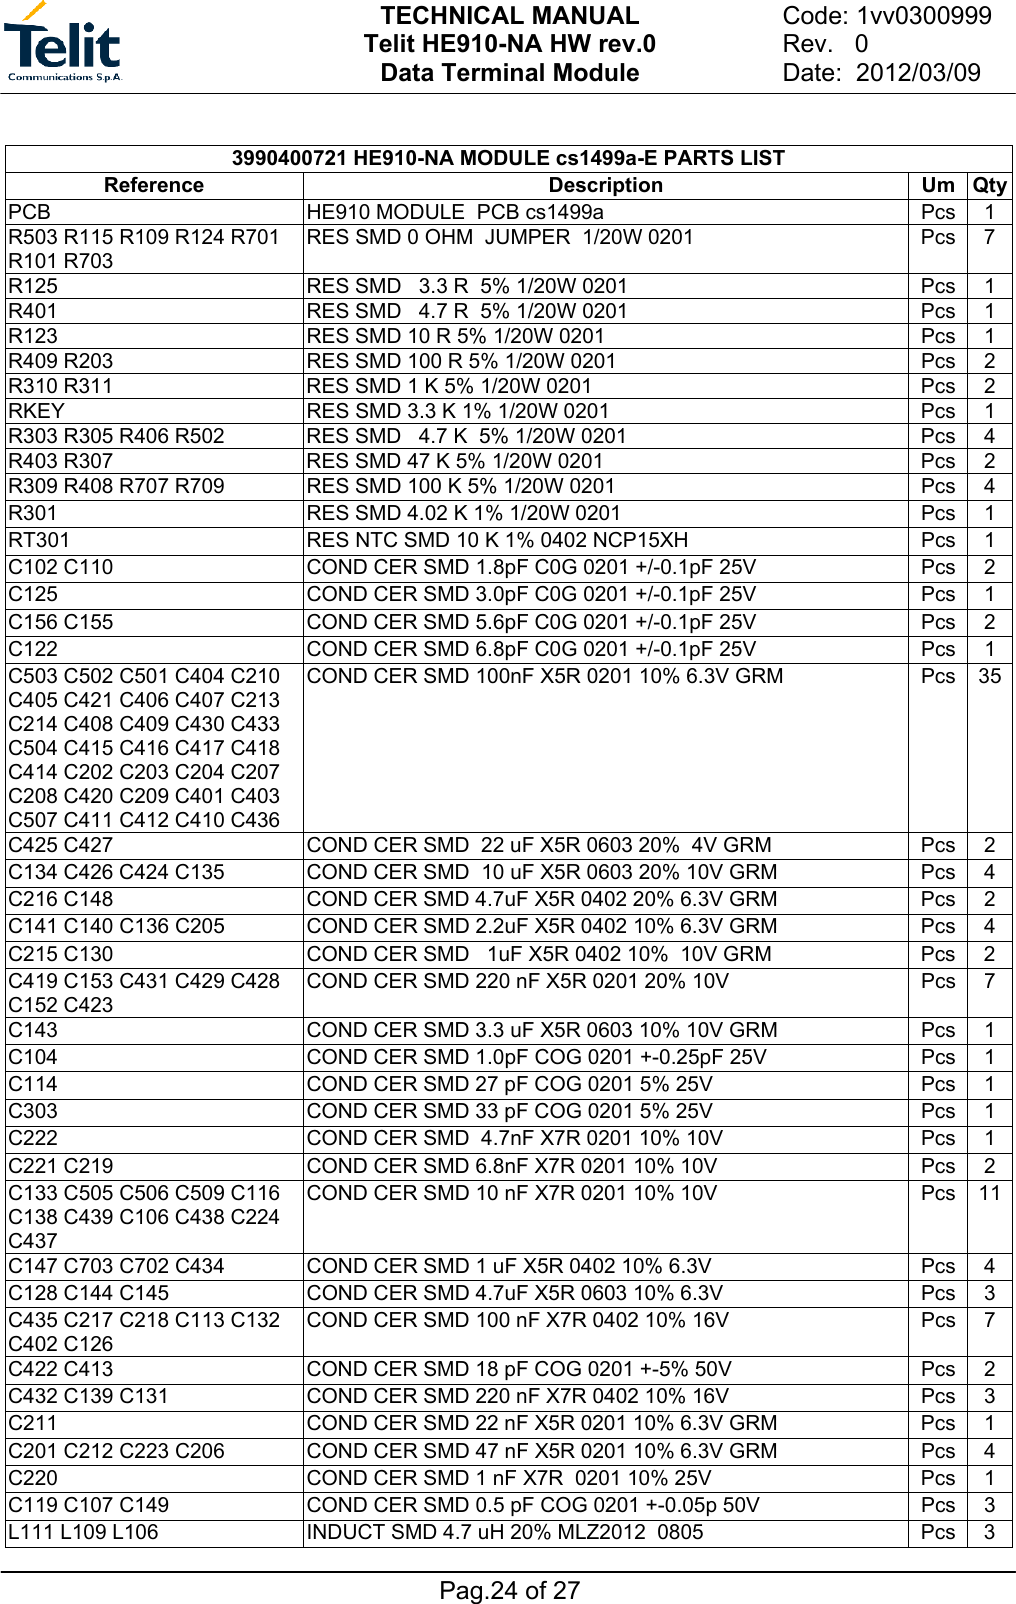 TECHNICAL MANUAL Telit HE910-NA HW rev.0 Data Terminal Module   Code: 1vv0300999    Rev.   0  Date:  2012/03/09   3990400721 HE910-NA MODULE cs1499a-E PARTS LIST Reference Description Um QtyPCB  HE910 MODULE  PCB cs1499a  Pcs  1 R503 R115 R109 R124 R701 R101 R703  RES SMD 0 OHM  JUMPER  1/20W 0201  Pcs  7 R125  RES SMD   3.3 R  5% 1/20W 0201  Pcs  1 R401  RES SMD   4.7 R  5% 1/20W 0201  Pcs  1 R123  RES SMD 10 R 5% 1/20W 0201  Pcs  1 R409 R203  RES SMD 100 R 5% 1/20W 0201  Pcs  2 R310 R311  RES SMD 1 K 5% 1/20W 0201    Pcs  2 RKEY  RES SMD 3.3 K 1% 1/20W 0201  Pcs  1 R303 R305 R406 R502  RES SMD   4.7 K  5% 1/20W 0201    Pcs  4 R403 R307  RES SMD 47 K 5% 1/20W 0201    Pcs    2 R309 R408 R707 R709   RES SMD 100 K 5% 1/20W 0201    Pcs  4 R301  RES SMD 4.02 K 1% 1/20W 0201  Pcs  1 RT301  RES NTC SMD 10 K 1% 0402 NCP15XH  Pcs  1 C102 C110  COND CER SMD 1.8pF C0G 0201 +/-0.1pF 25V  Pcs  2 C125  COND CER SMD 3.0pF C0G 0201 +/-0.1pF 25V  Pcs  1 C156 C155  COND CER SMD 5.6pF C0G 0201 +/-0.1pF 25V  Pcs  2 C122  COND CER SMD 6.8pF C0G 0201 +/-0.1pF 25V  Pcs    1 C503 C502 C501 C404 C210 C405 C421 C406 C407 C213 C214 C408 C409 C430 C433 C504 C415 C416 C417 C418 C414 C202 C203 C204 C207 C208 C420 C209 C401 C403 C507 C411 C412 C410 C436 COND CER SMD 100nF X5R 0201 10% 6.3V GRM  Pcs  35C425 C427  COND CER SMD  22 uF X5R 0603 20%  4V GRM  Pcs  2 C134 C426 C424 C135  COND CER SMD  10 uF X5R 0603 20% 10V GRM  Pcs  4 C216 C148  COND CER SMD 4.7uF X5R 0402 20% 6.3V GRM  Pcs  2 C141 C140 C136 C205   COND CER SMD 2.2uF X5R 0402 10% 6.3V GRM  Pcs  4 C215 C130  COND CER SMD   1uF X5R 0402 10%  10V GRM  Pcs  2 C419 C153 C431 C429 C428  C152 C423  COND CER SMD 220 nF X5R 0201 20% 10V  Pcs  7 C143  COND CER SMD 3.3 uF X5R 0603 10% 10V GRM  Pcs  1 C104  COND CER SMD 1.0pF COG 0201 +-0.25pF 25V  Pcs  1 C114  COND CER SMD 27 pF COG 0201 5% 25V  Pcs  1 C303  COND CER SMD 33 pF COG 0201 5% 25V  Pcs  1 C222  COND CER SMD  4.7nF X7R 0201 10% 10V  Pcs  1 C221 C219  COND CER SMD 6.8nF X7R 0201 10% 10V  Pcs  2 C133 C505 C506 C509 C116  C138 C439 C106 C438 C224  C437 COND CER SMD 10 nF X7R 0201 10% 10V  Pcs  11C147 C703 C702 C434  COND CER SMD 1 uF X5R 0402 10% 6.3V  Pcs  4 C128 C144 C145  COND CER SMD 4.7uF X5R 0603 10% 6.3V  Pcs  3 C435 C217 C218 C113 C132 C402 C126  COND CER SMD 100 nF X7R 0402 10% 16V  Pcs  7 C422 C413  COND CER SMD 18 pF COG 0201 +-5% 50V  Pcs  2 C432 C139 C131   COND CER SMD 220 nF X7R 0402 10% 16V  Pcs  3 C211  COND CER SMD 22 nF X5R 0201 10% 6.3V GRM  Pcs  1 C201 C212 C223 C206   COND CER SMD 47 nF X5R 0201 10% 6.3V GRM  Pcs  4 C220  COND CER SMD 1 nF X7R  0201 10% 25V  Pcs  1 C119 C107 C149  COND CER SMD 0.5 pF COG 0201 +-0.05p 50V  Pcs  3 L111 L109 L106   INDUCT SMD 4.7 uH 20% MLZ2012  0805  Pcs  3 Pag.24 of 27 